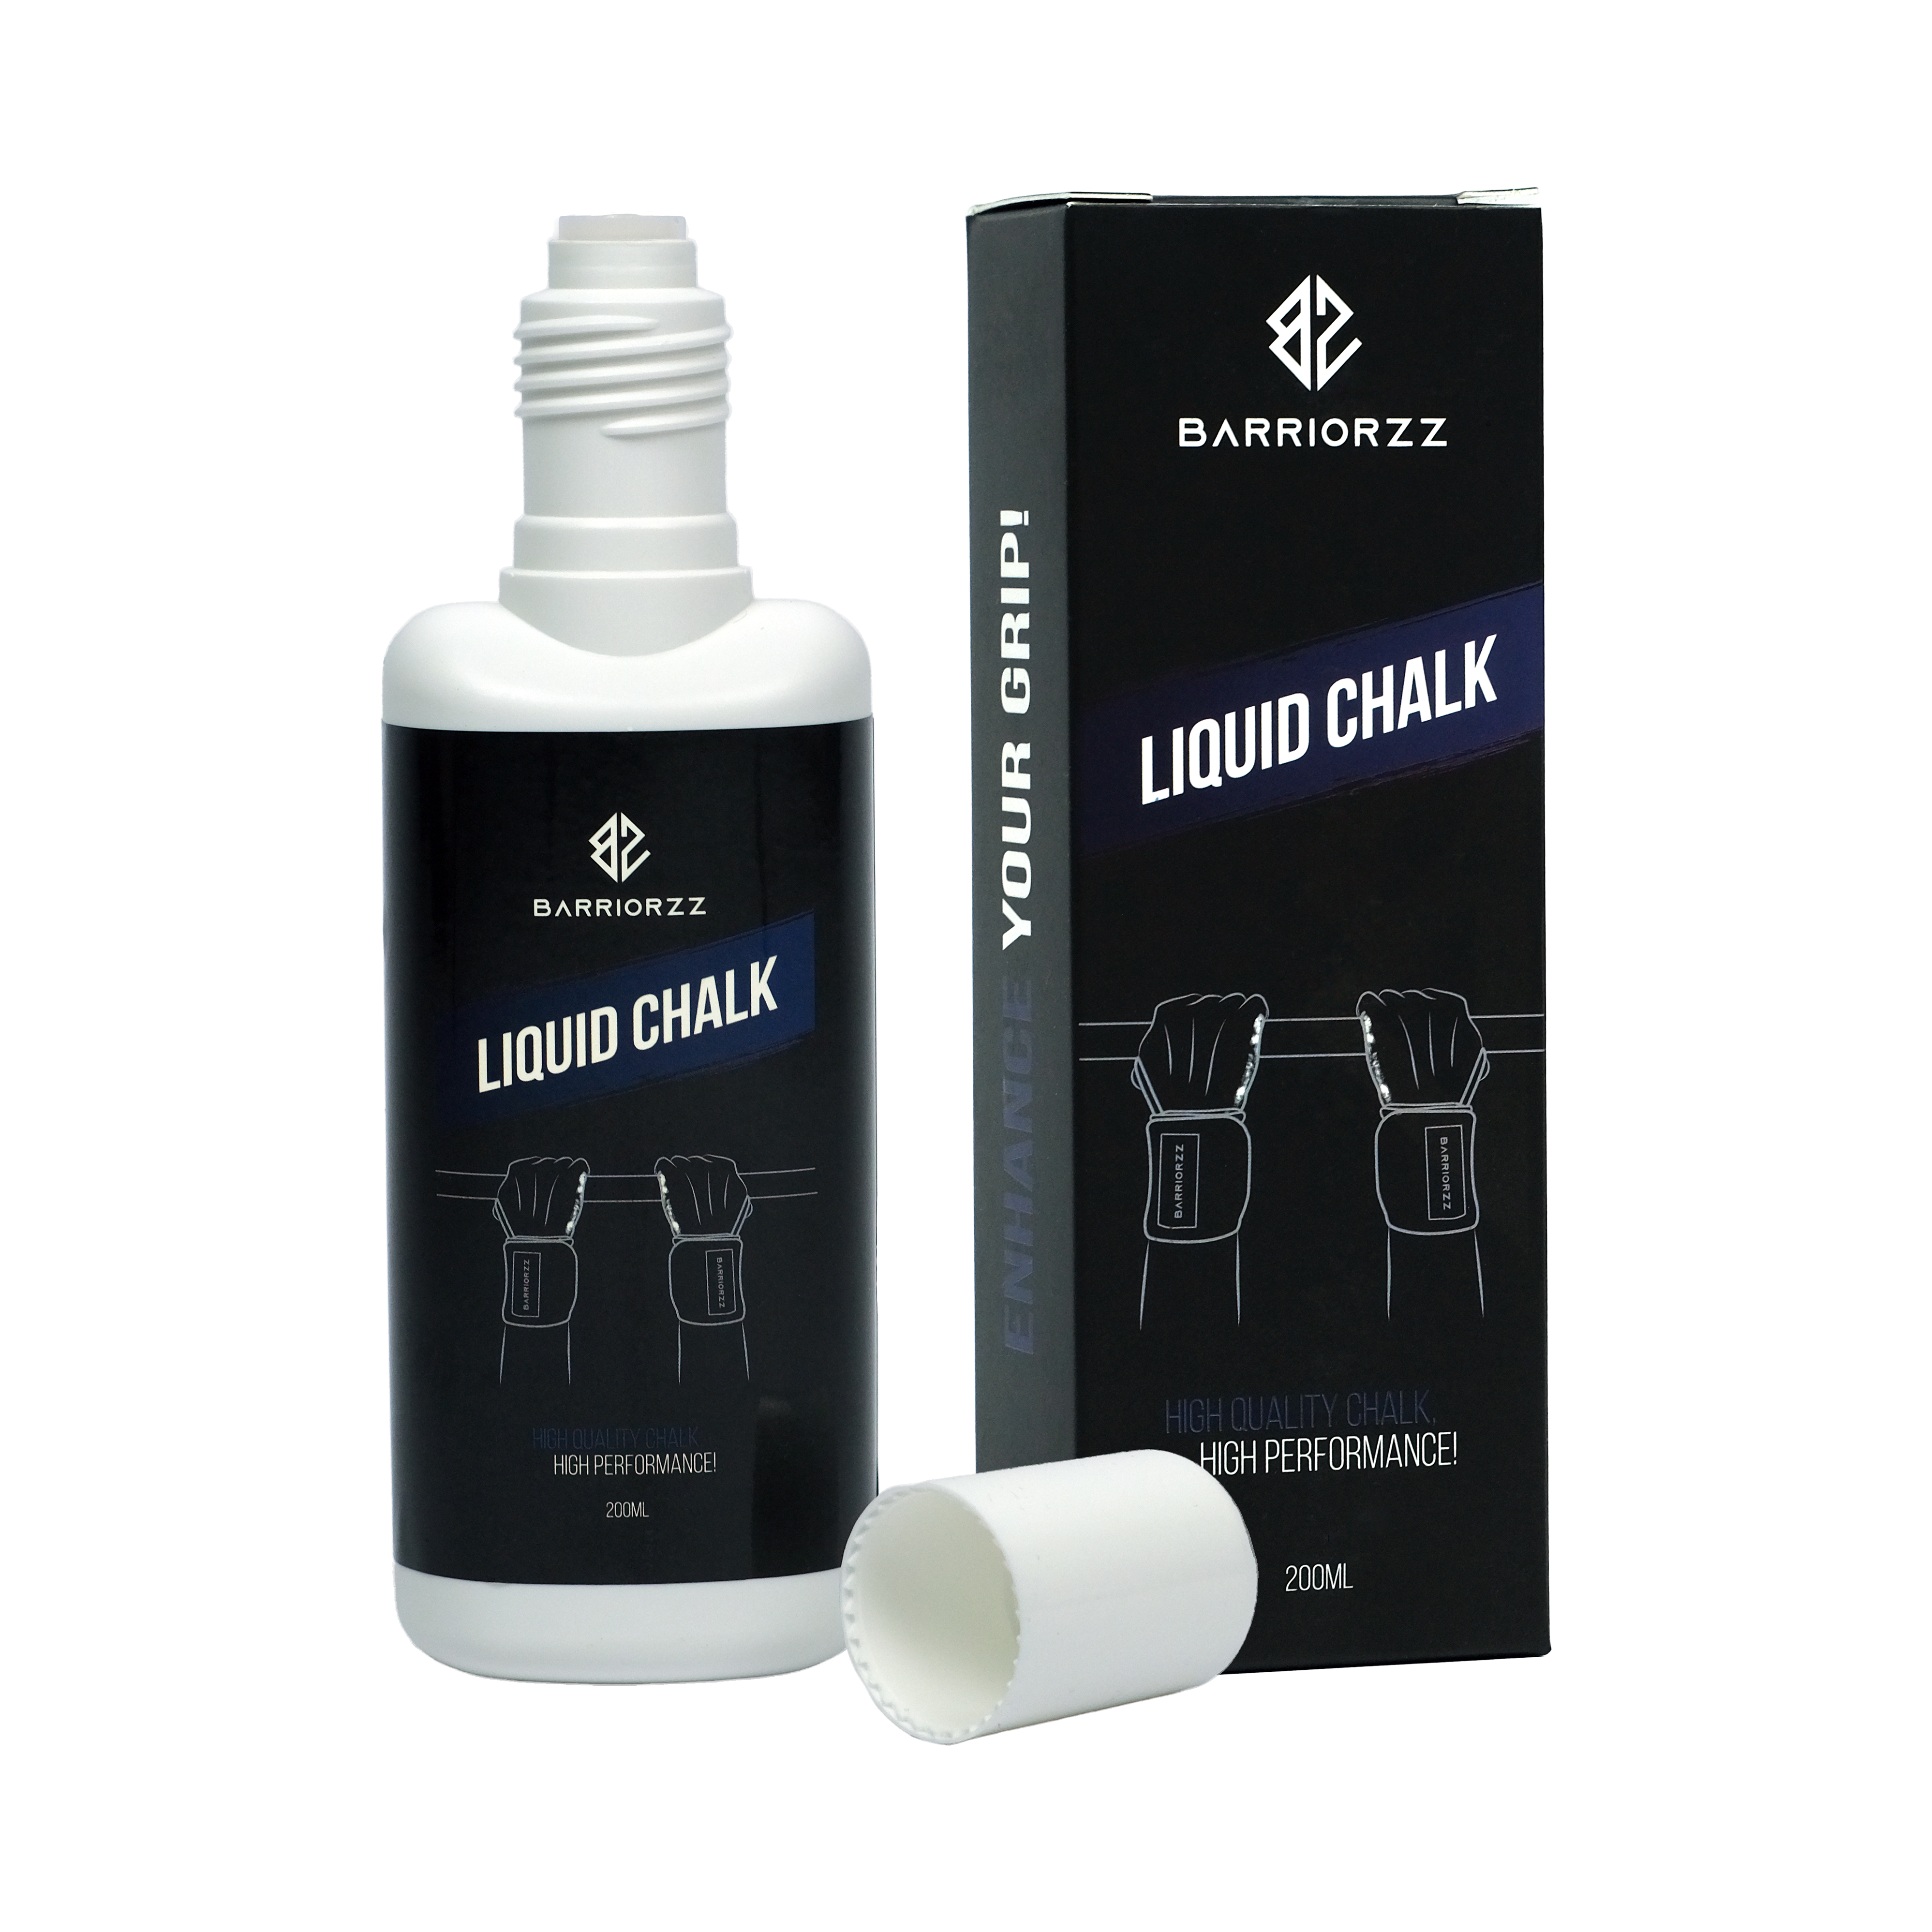 Liquid Chalk